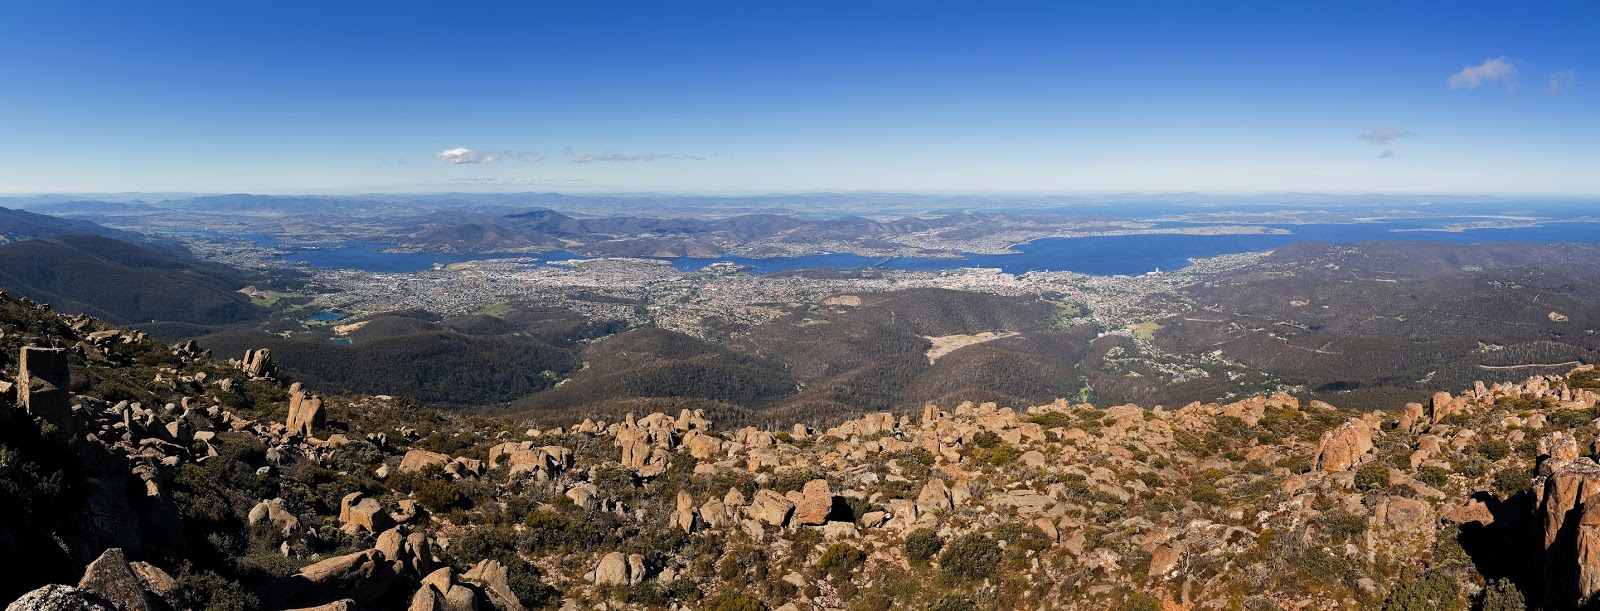 塔斯馬尼亞-威靈頓山-景點-推薦-旅遊-自由行-澳洲-Tasmania-Hobart-Mount-Wellington-Tourist-Attraction-Australia